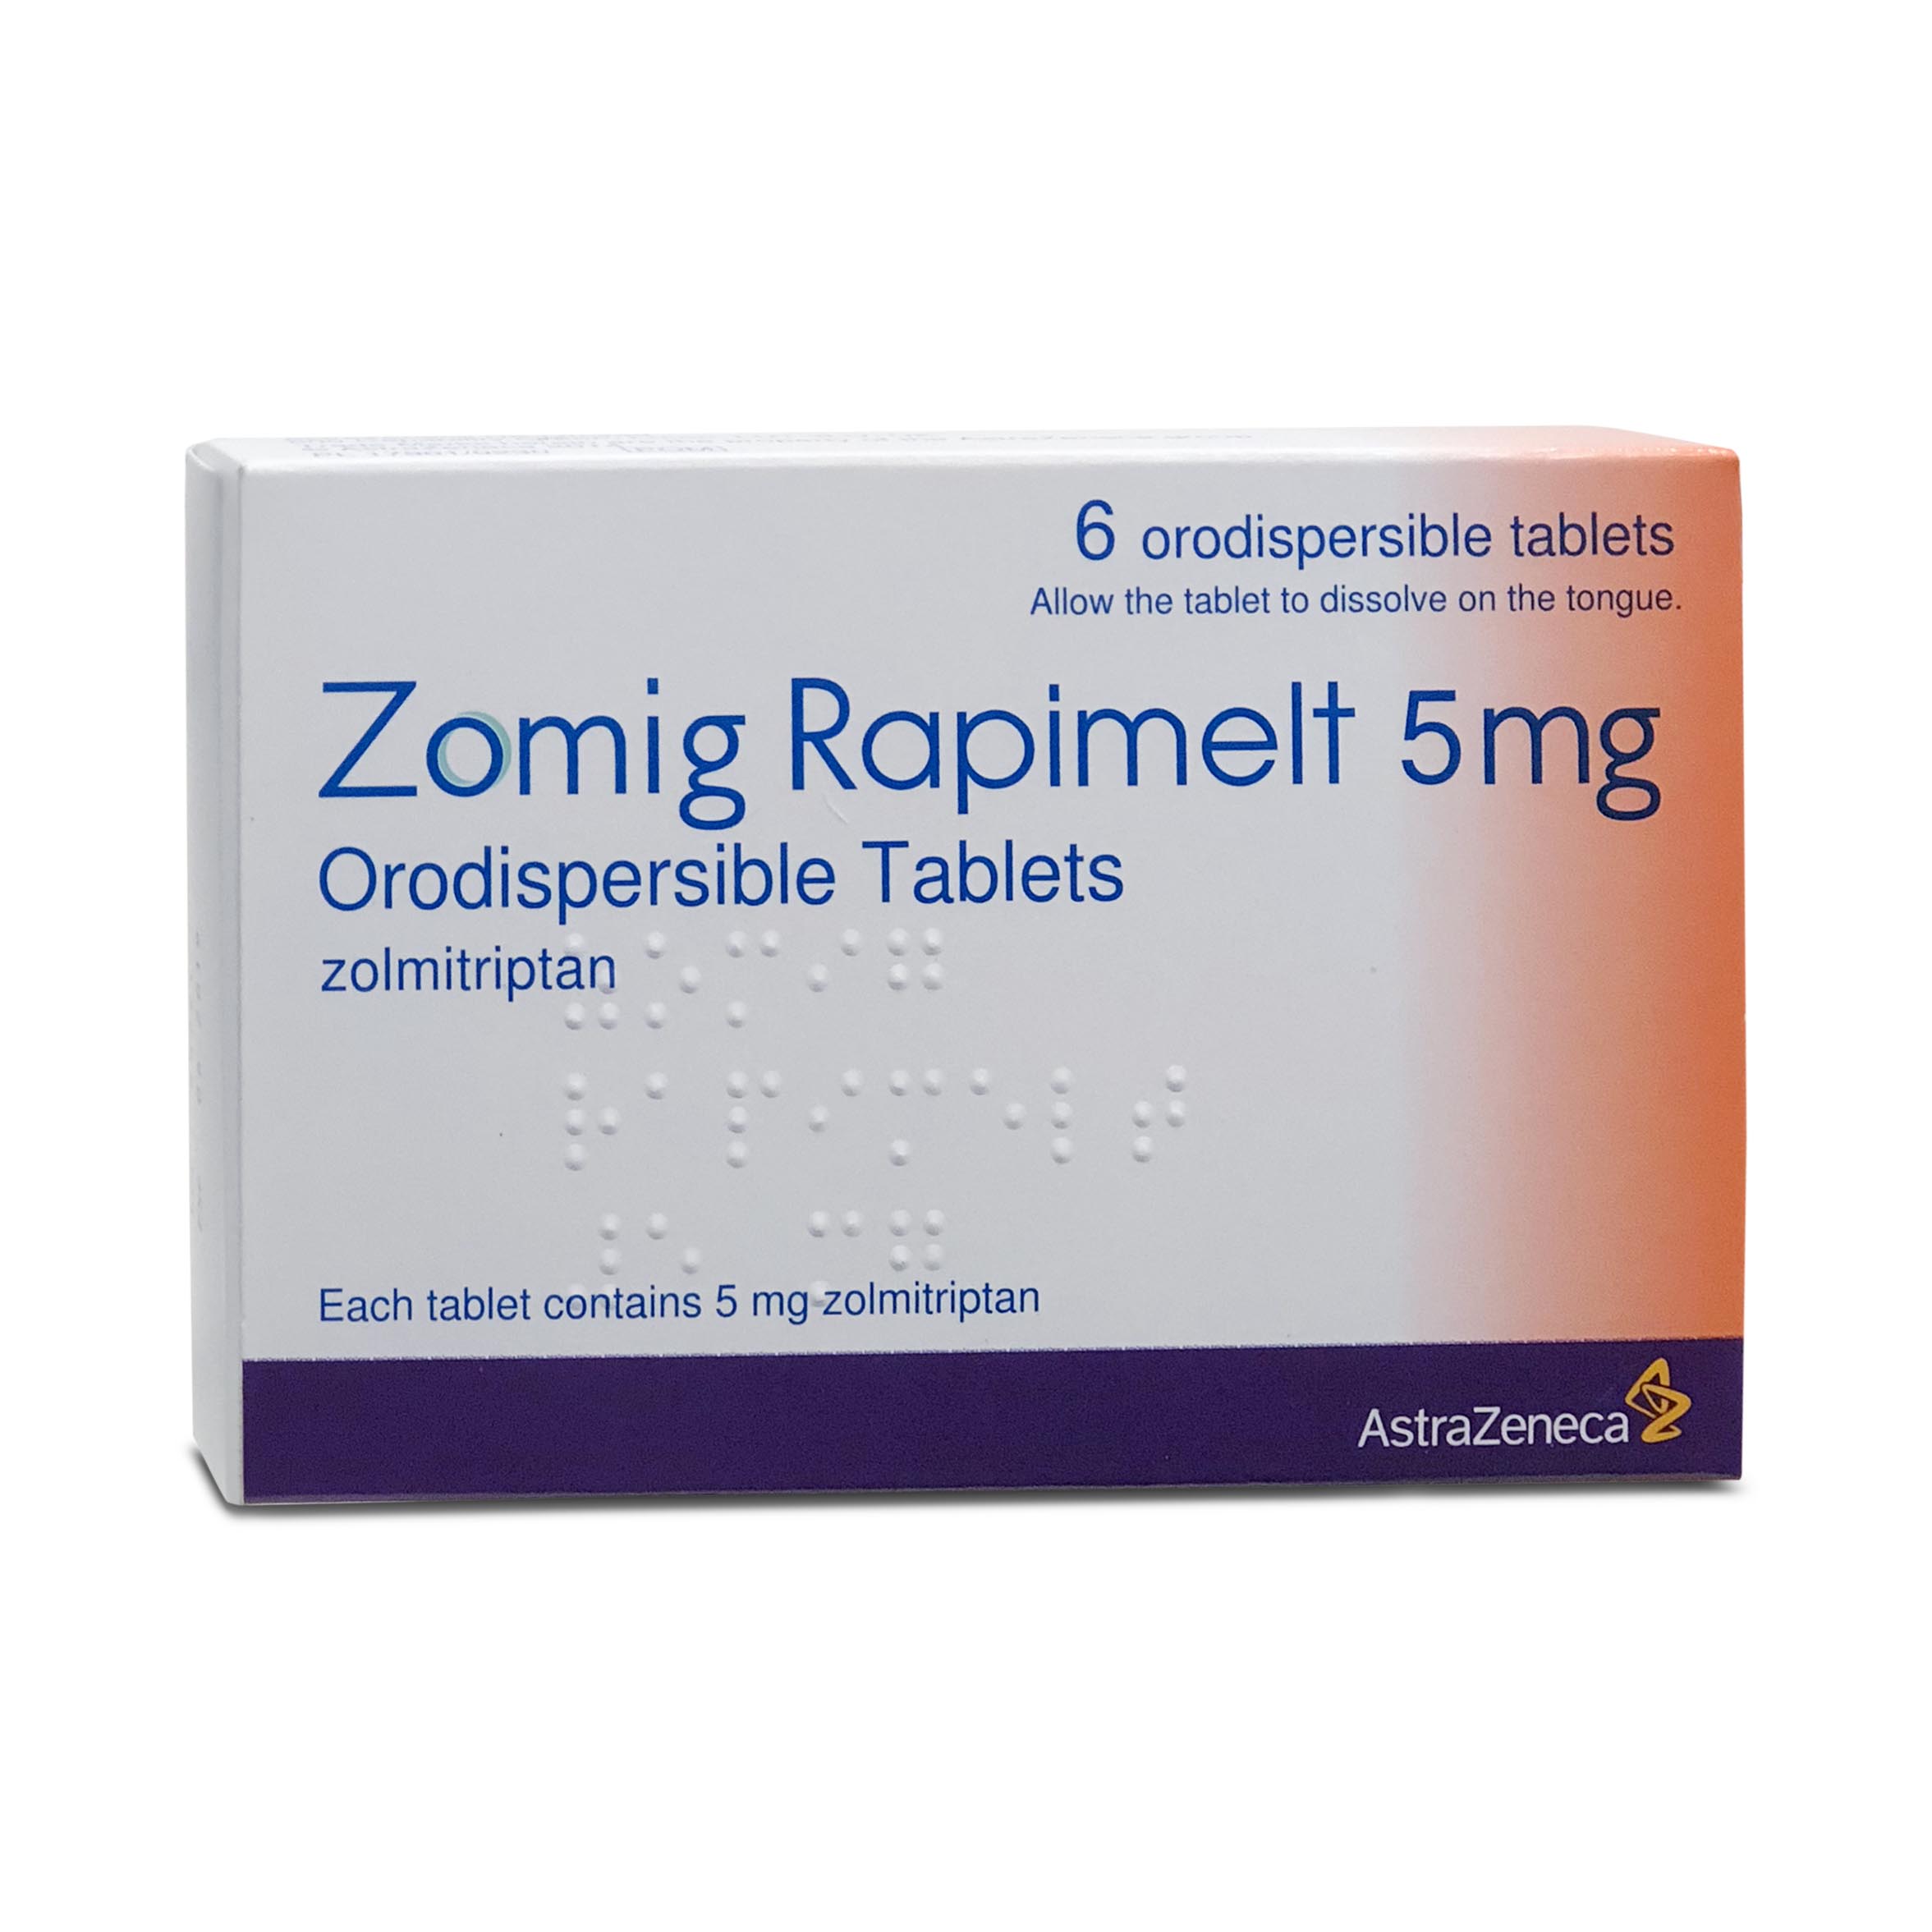 Zomig Rapimelt 5mg 6 orodispersible tablets AstraZeneca